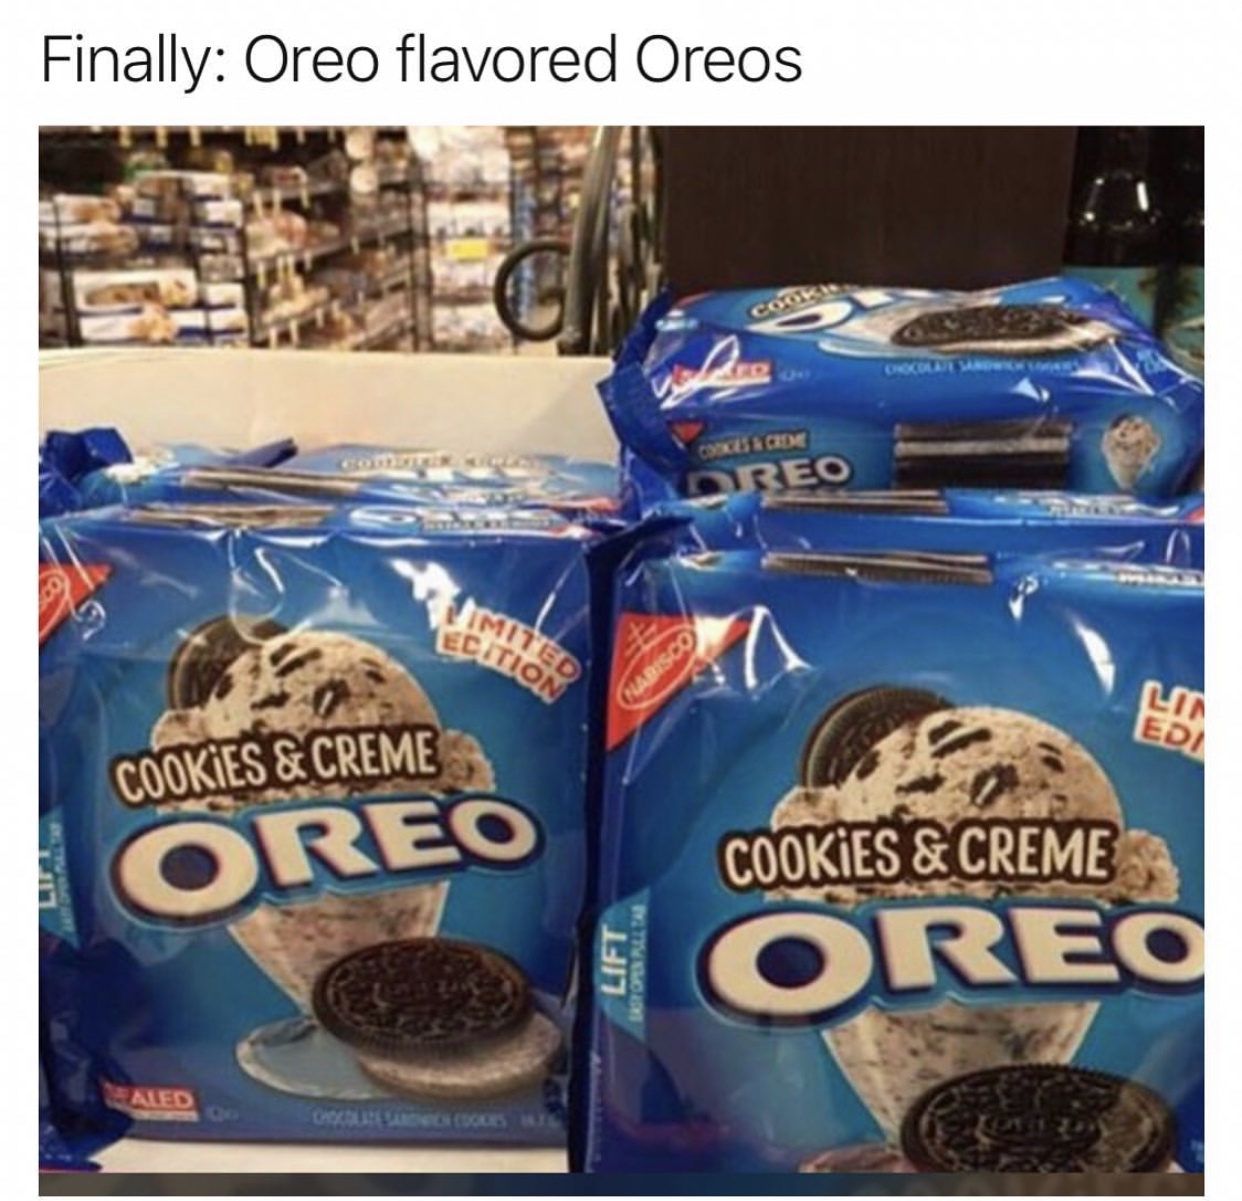 oreo memes - Finally Oreo flavored Oreos C Es Cride Oreo Mited Edition Cookies & Creme Oreo Cookies & Creme Ored Lift Aled Ocedures